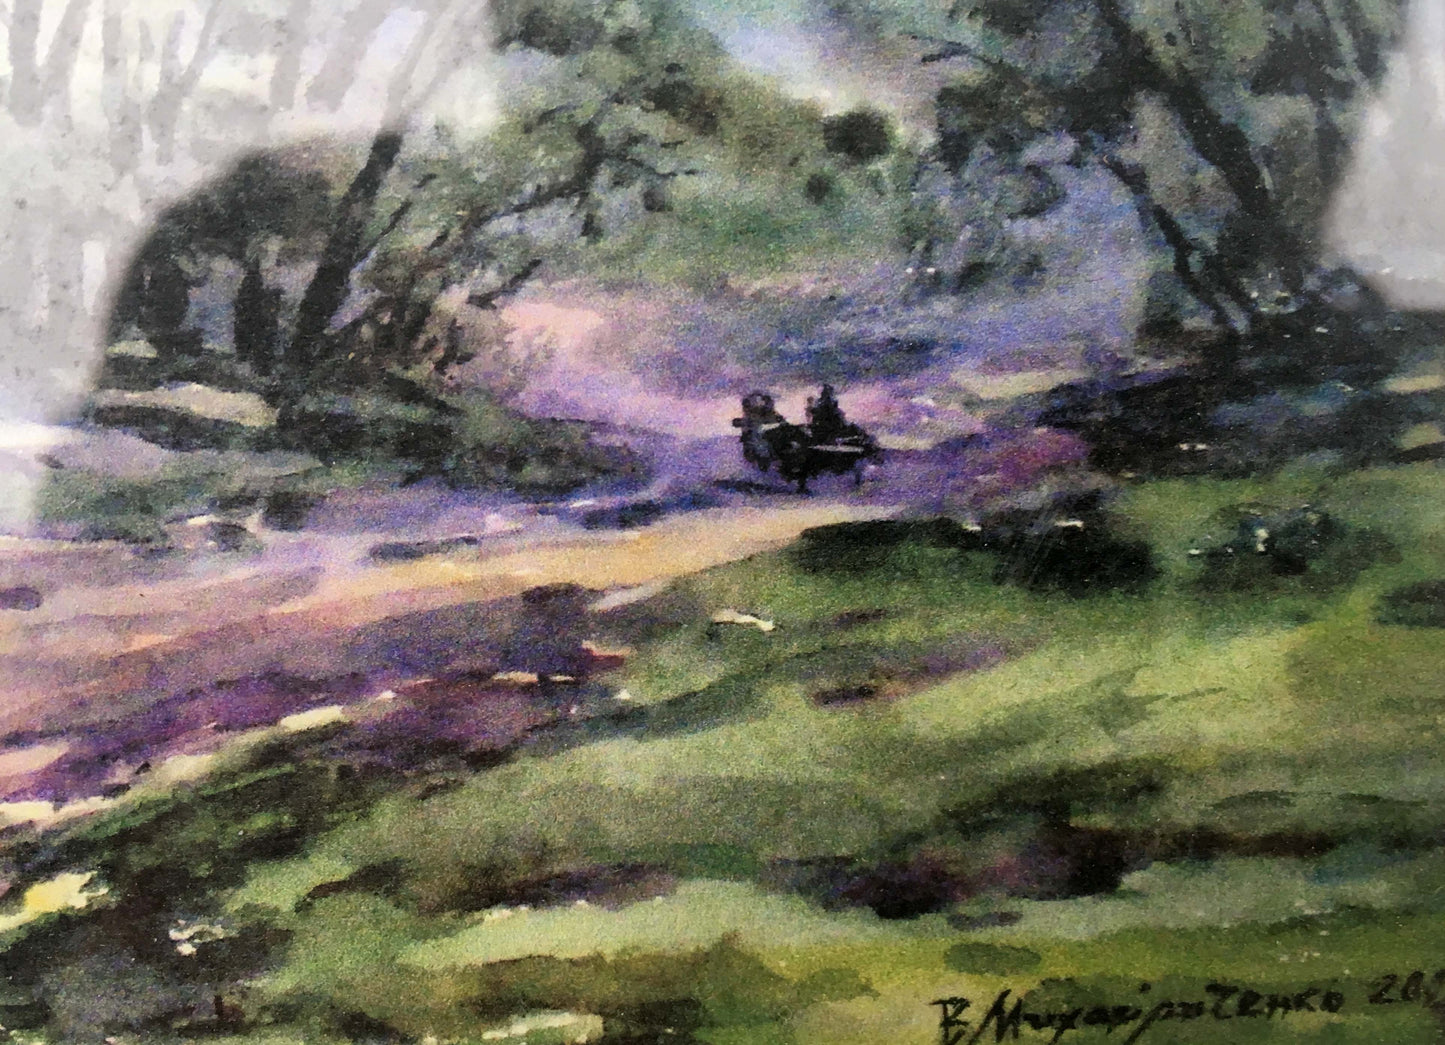 After the rain watecolor painting Viktor Mikhailichenko